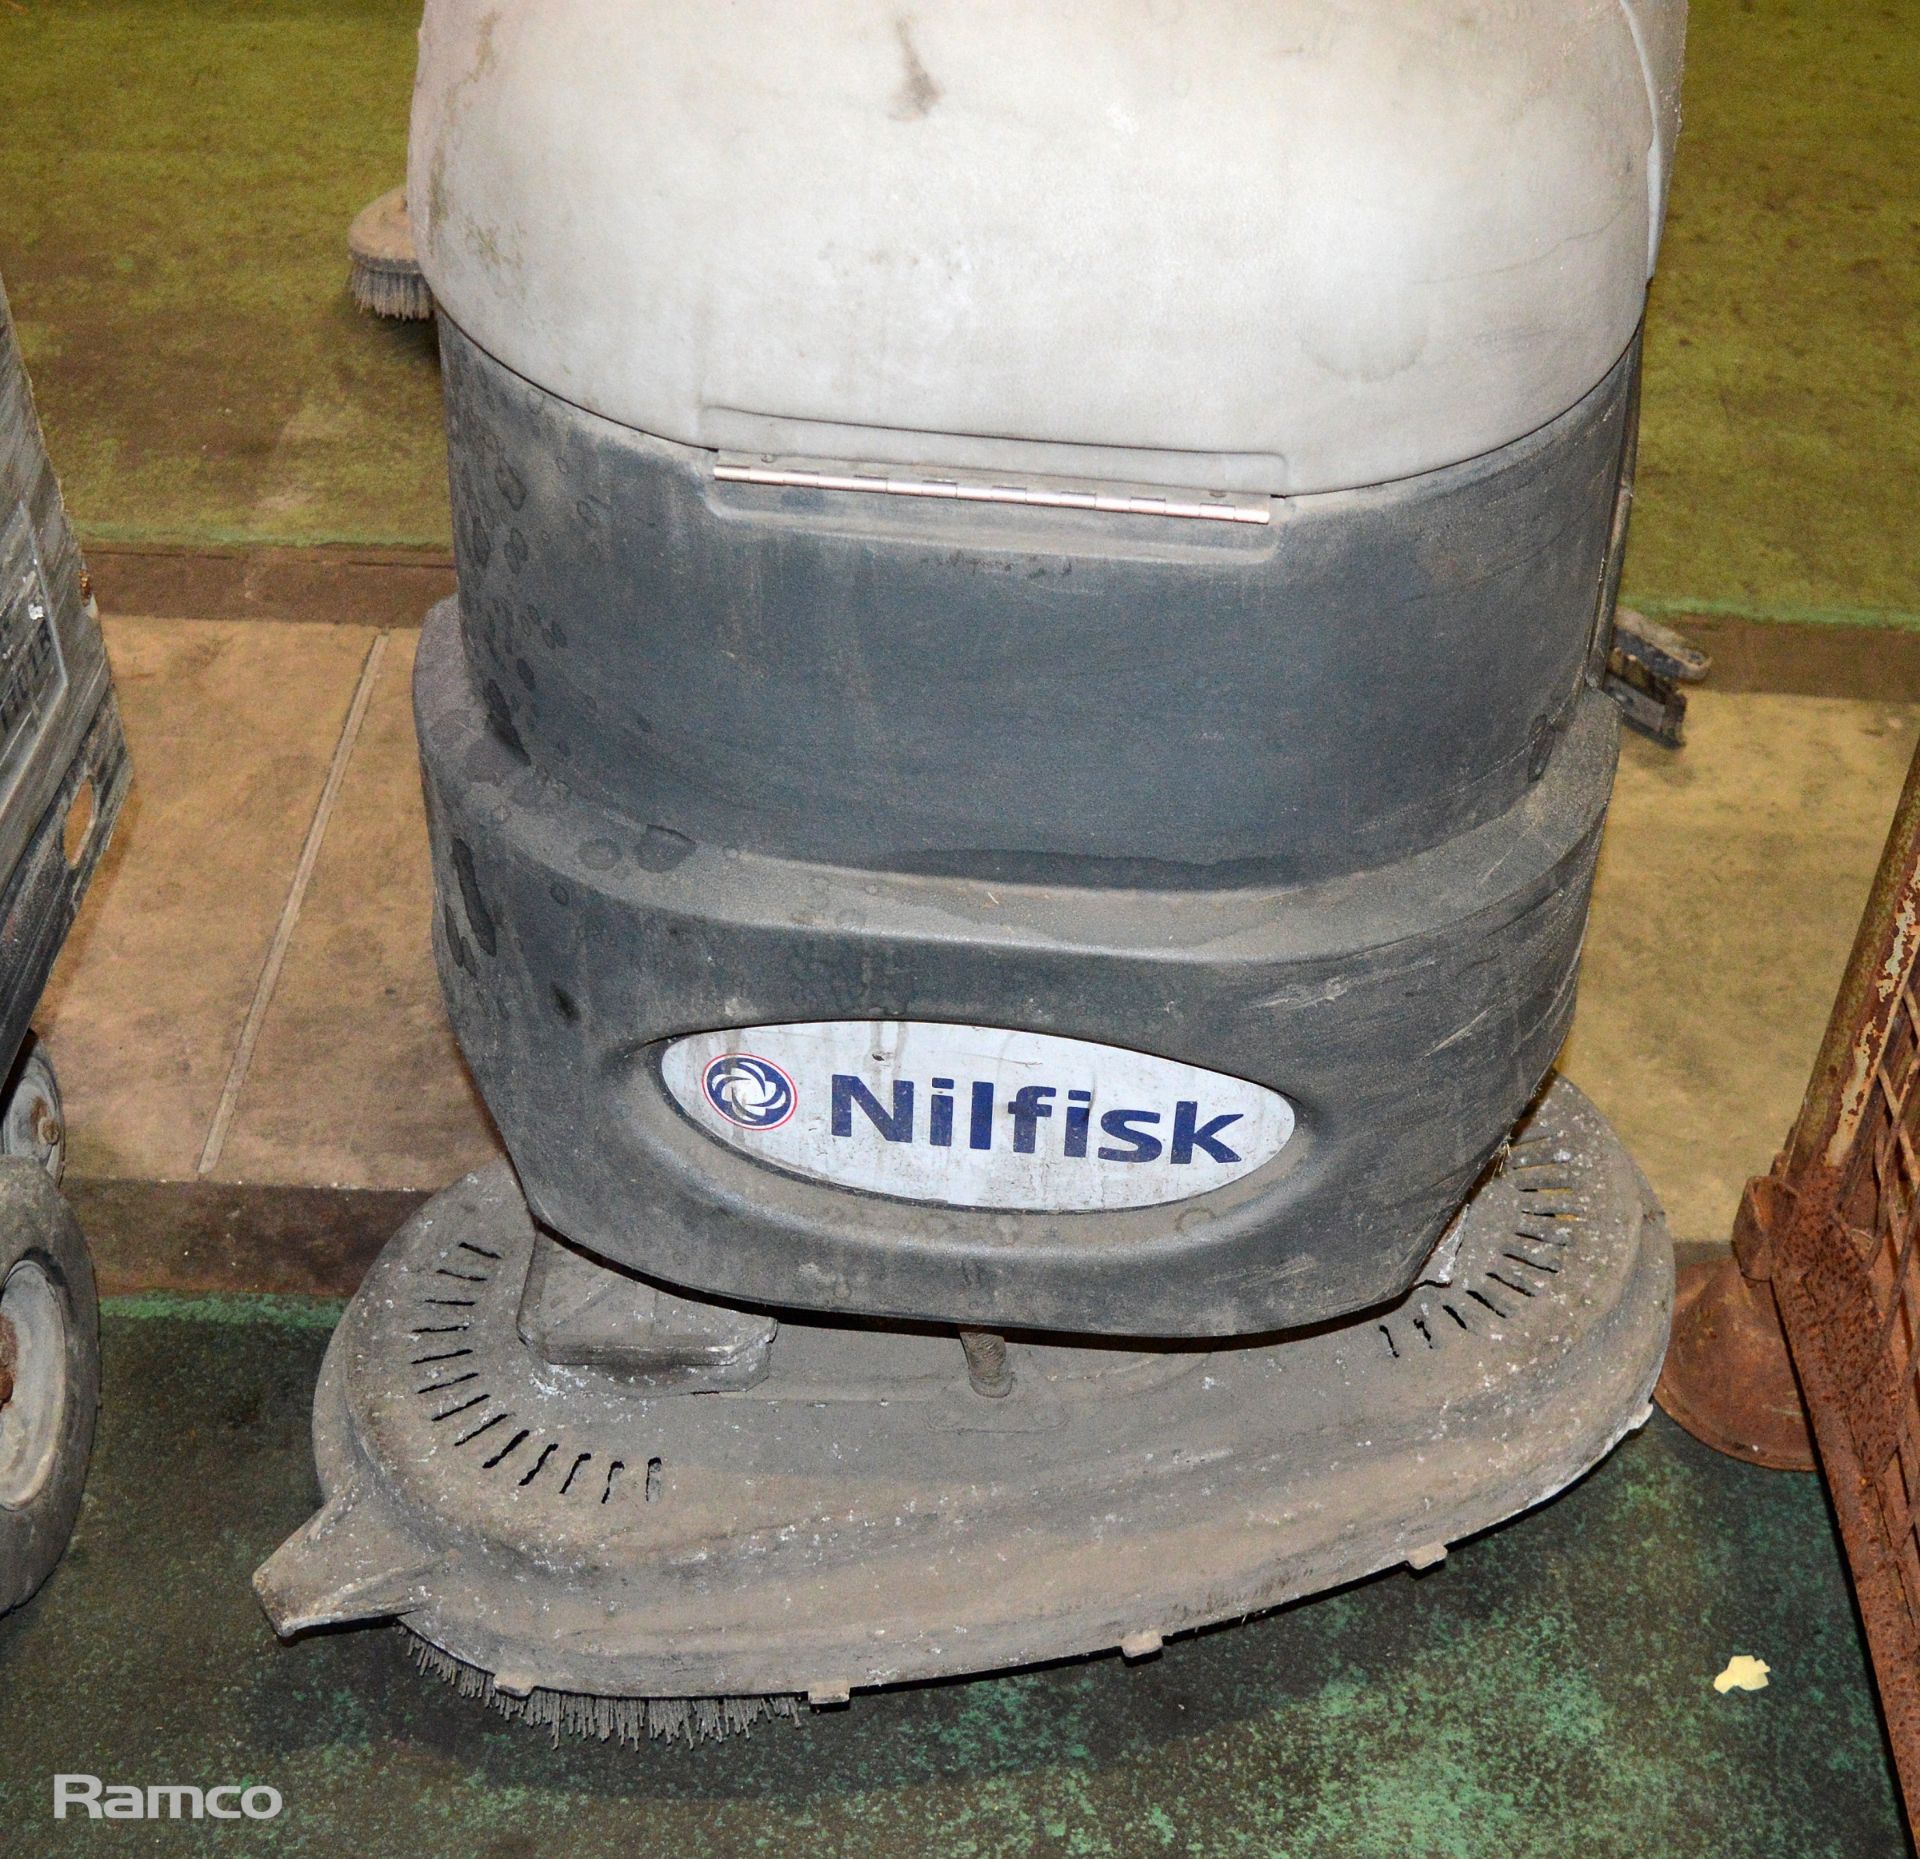 Nilfisk BA 725 walk behind floor scrubber - 147x95x118cm - Image 9 of 9